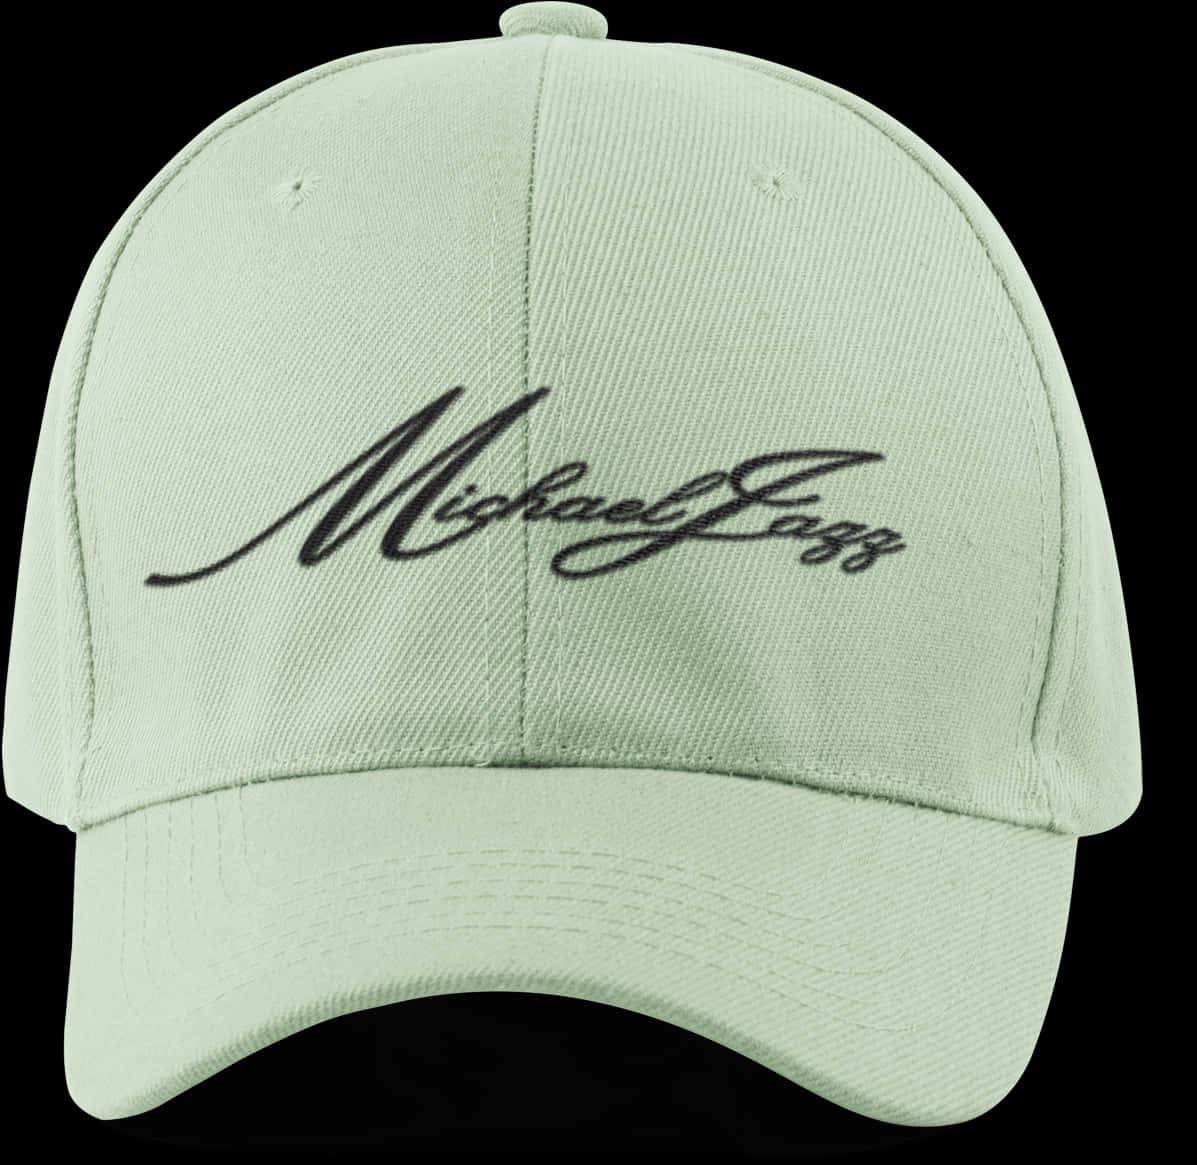 Michael Jordan Signature Cap PNG